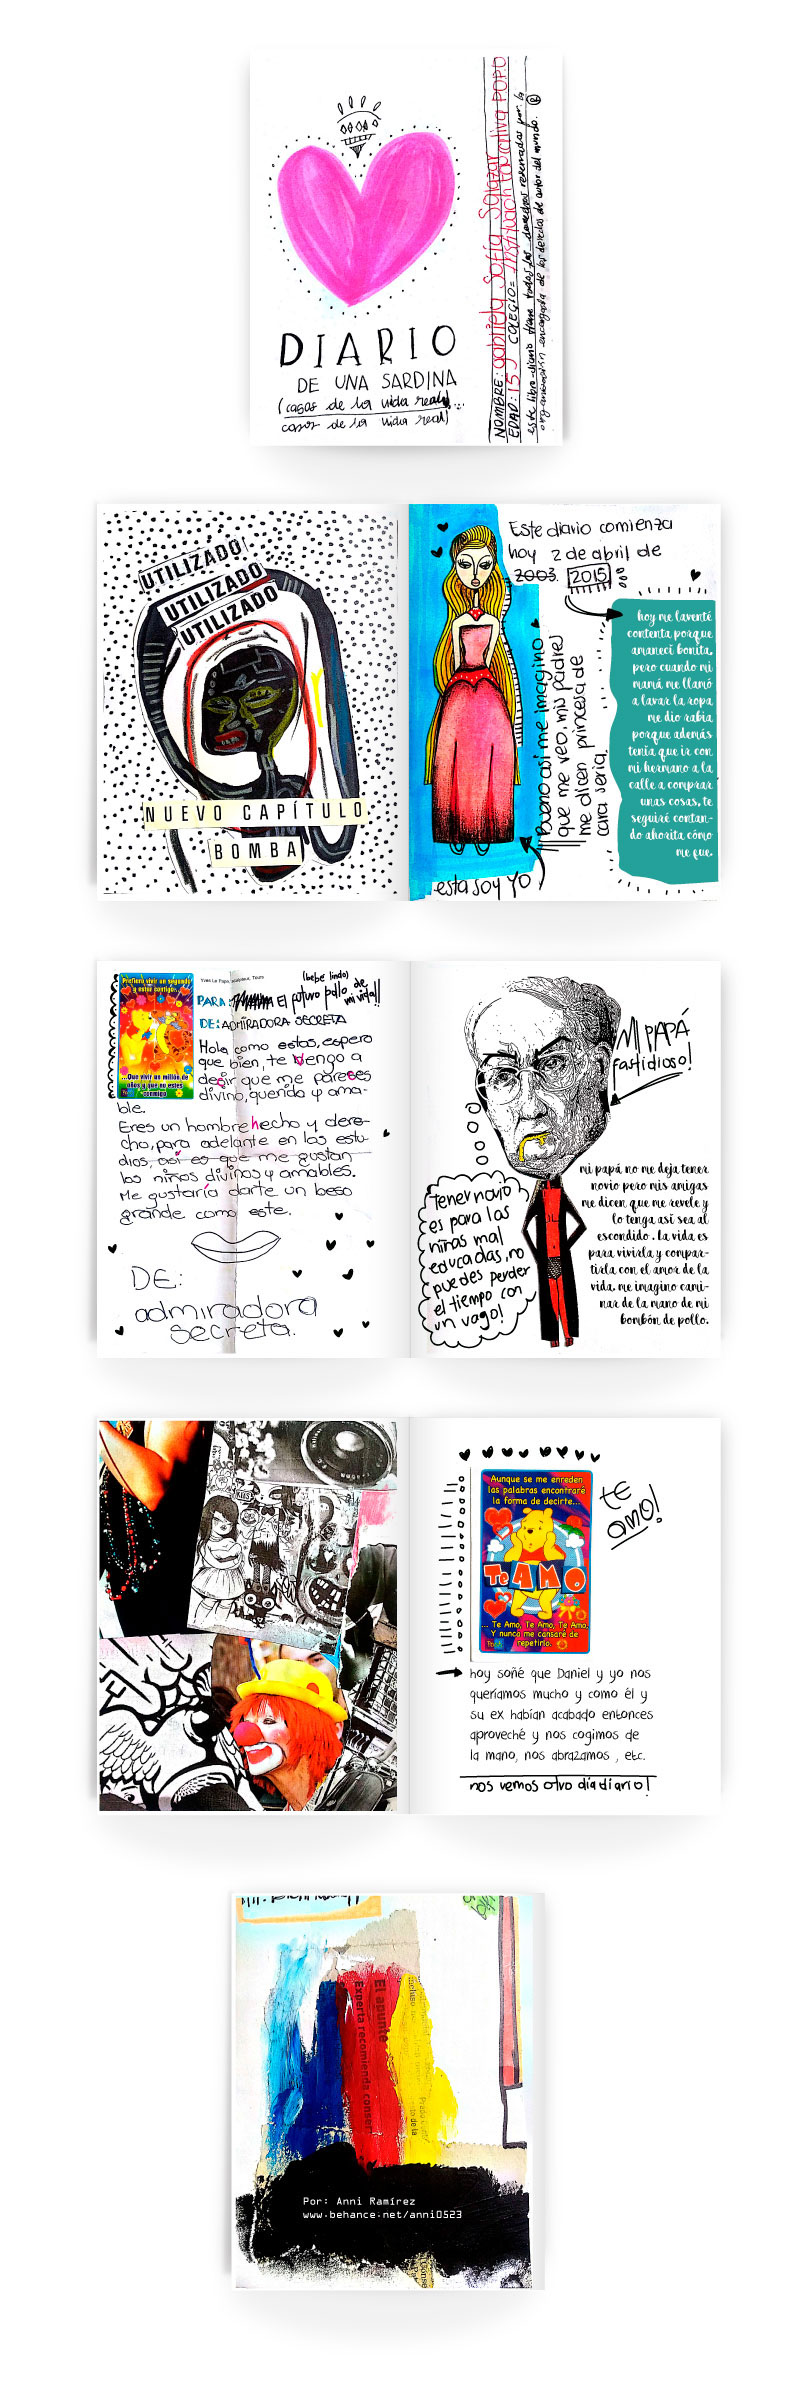 fanzine diario Adolescente diseño analogo digital Zine 